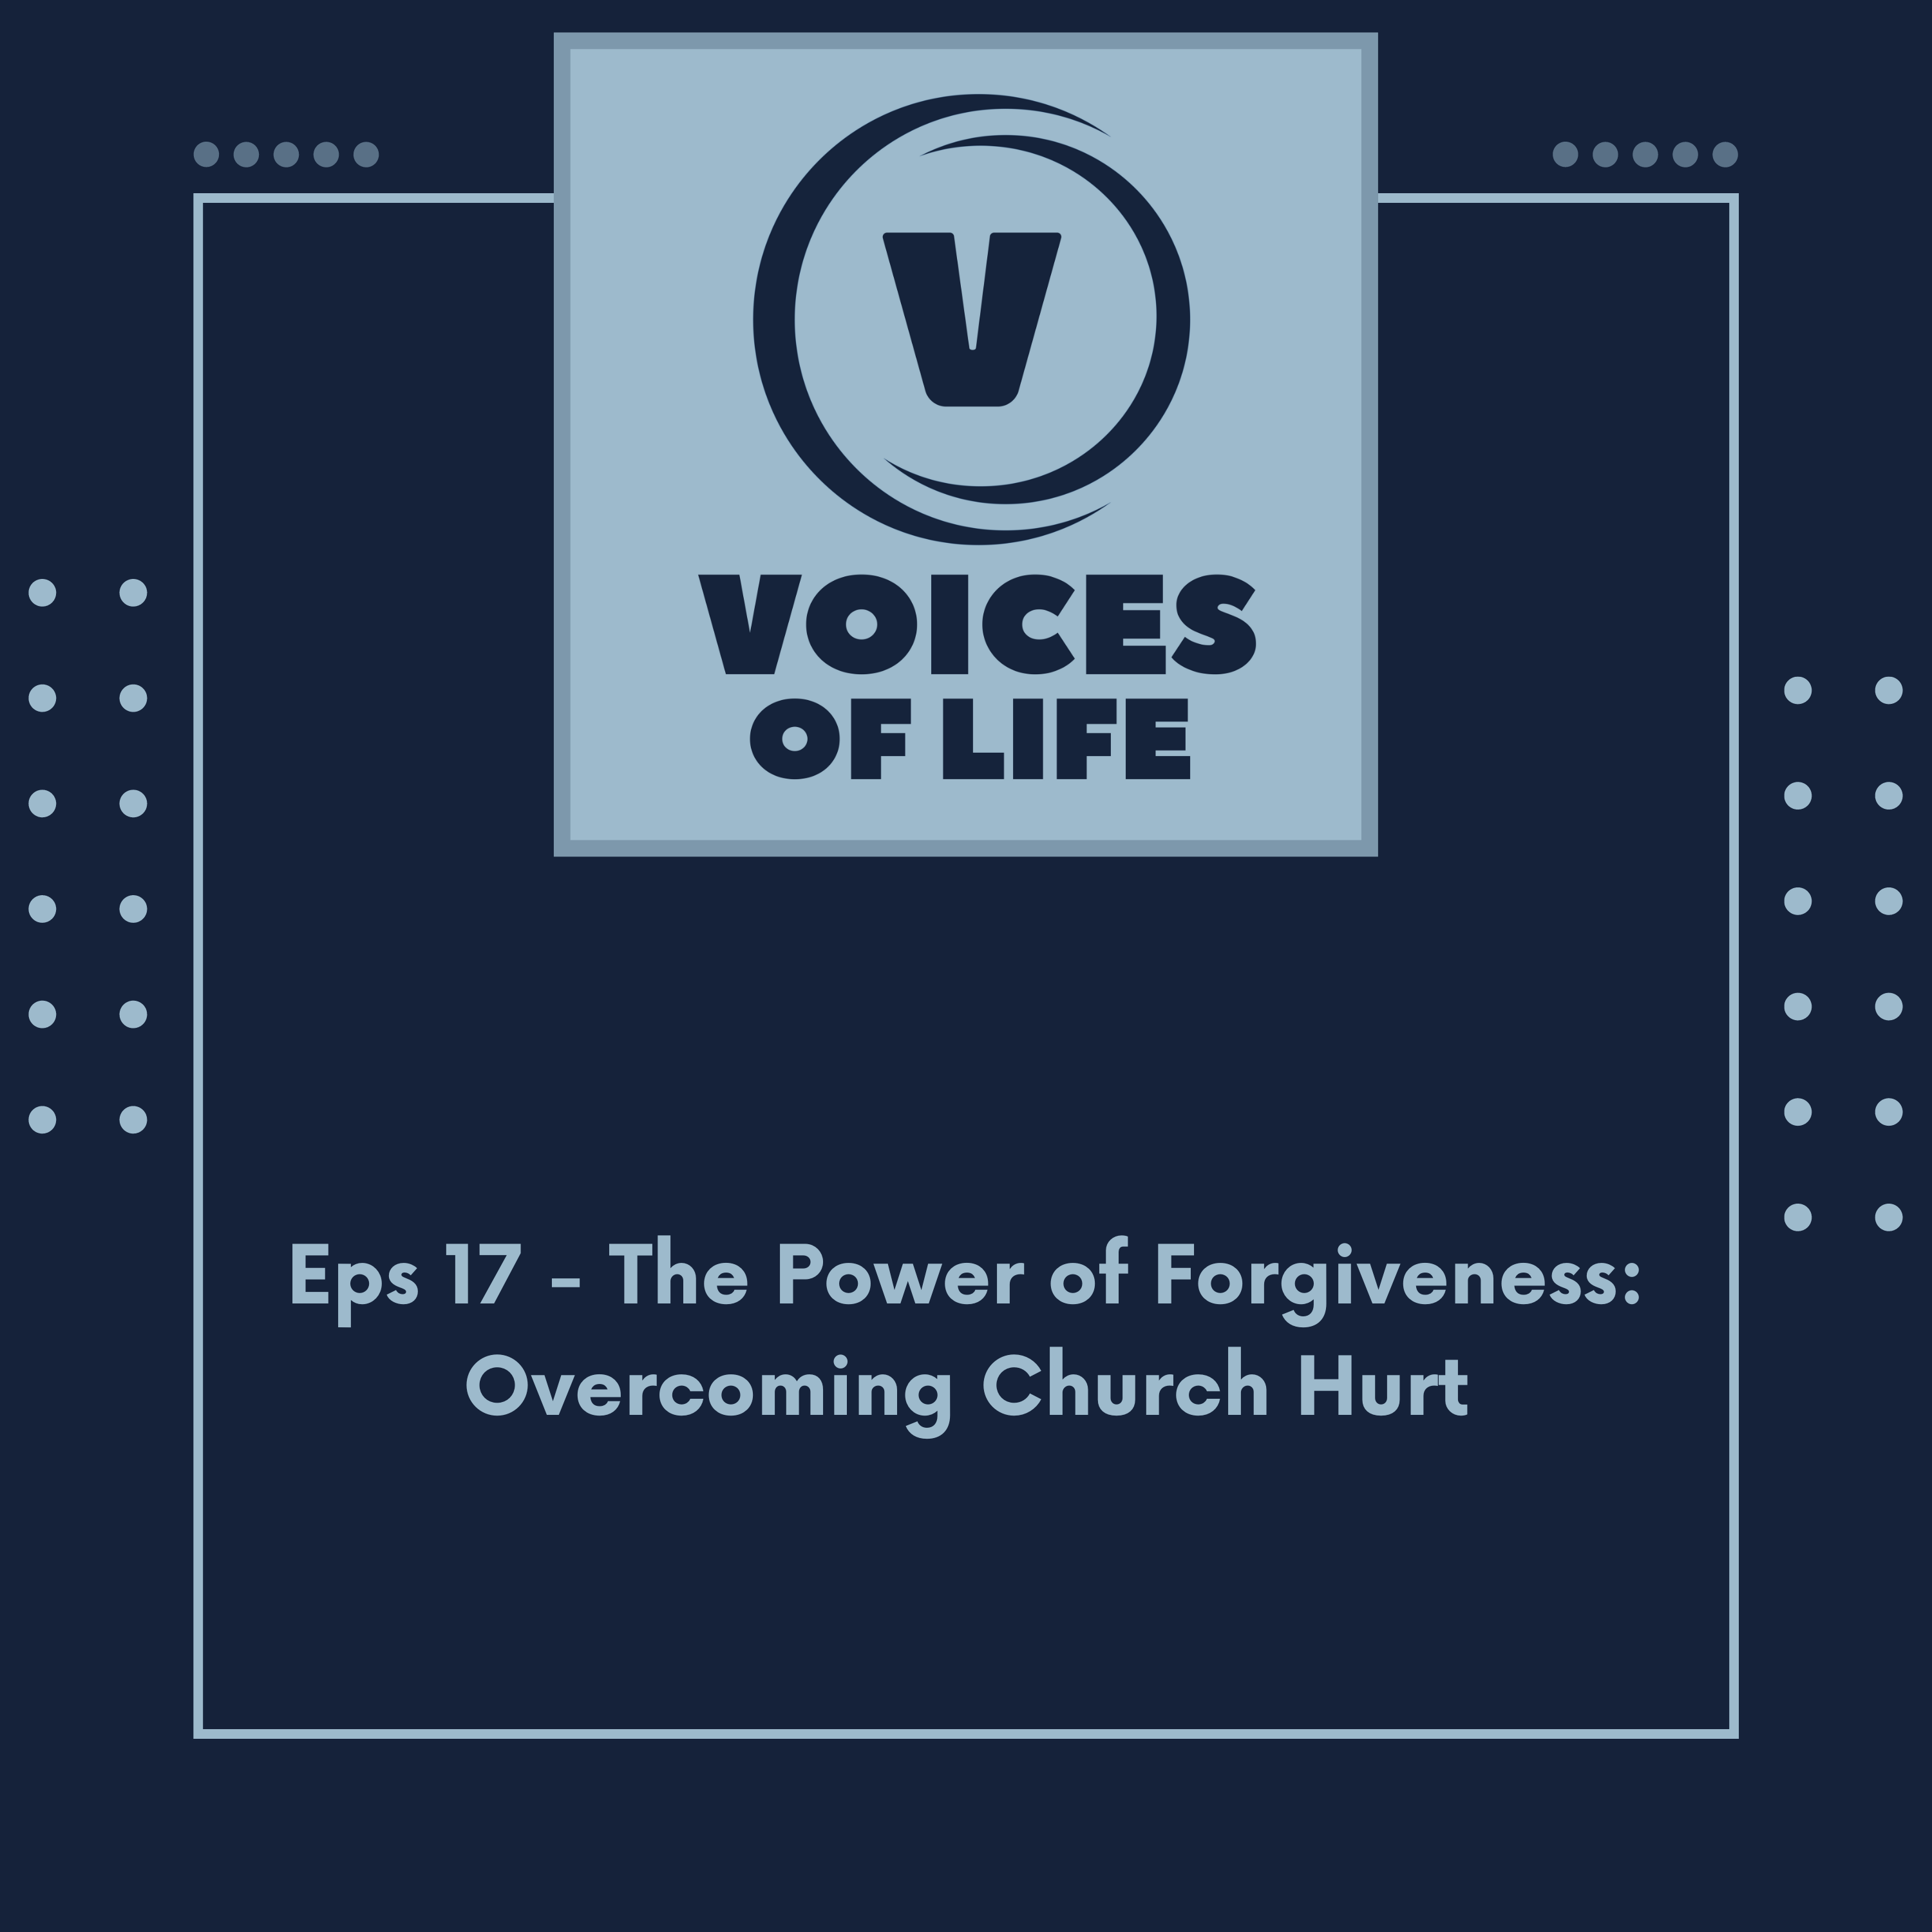 The Power of Forgiveness: Overcoming Church Hurt